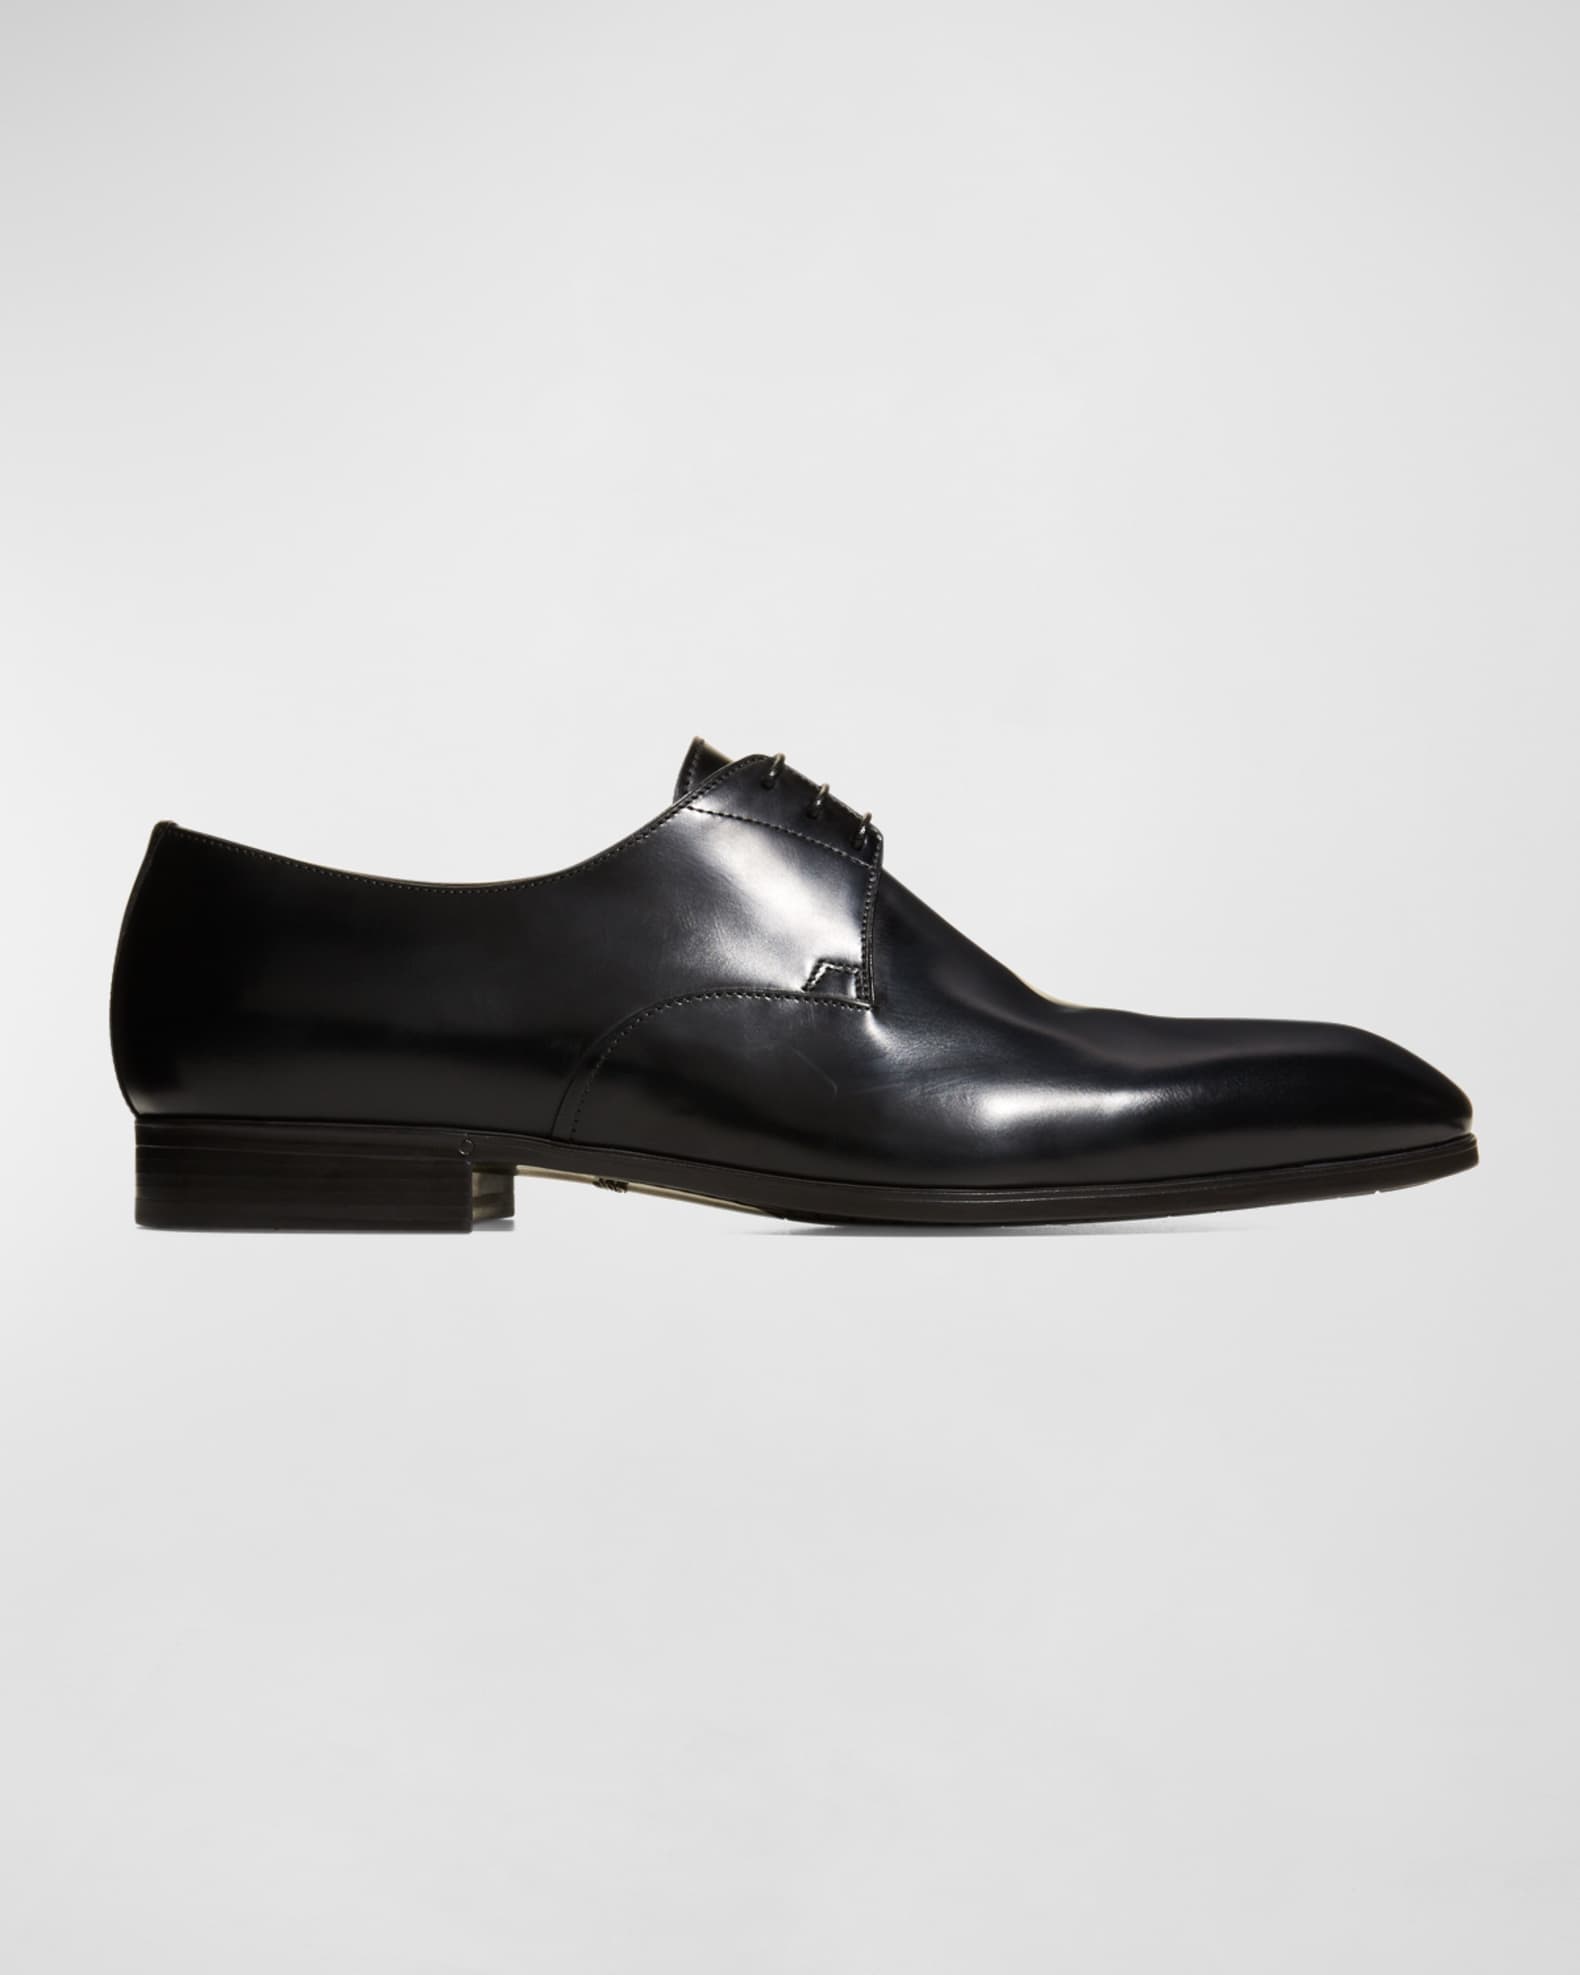 Santoni almond-toe leather derby shoes - Black